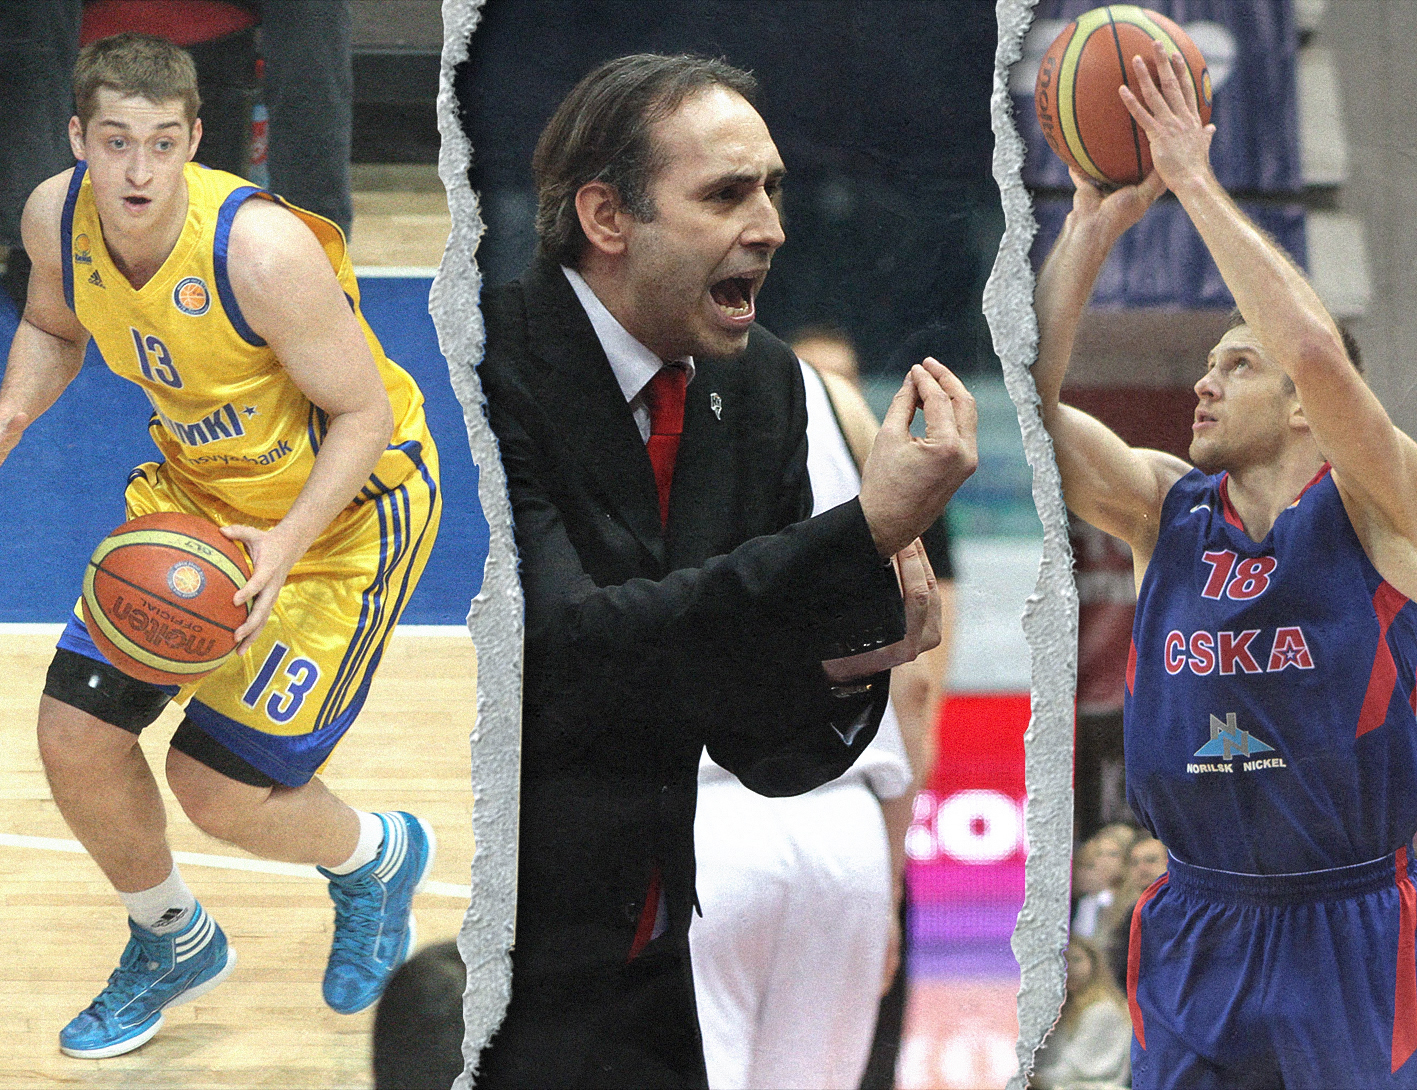 2011. Lukic, Khvostov, and 13 more representatives of 2011/12 season in 2020.